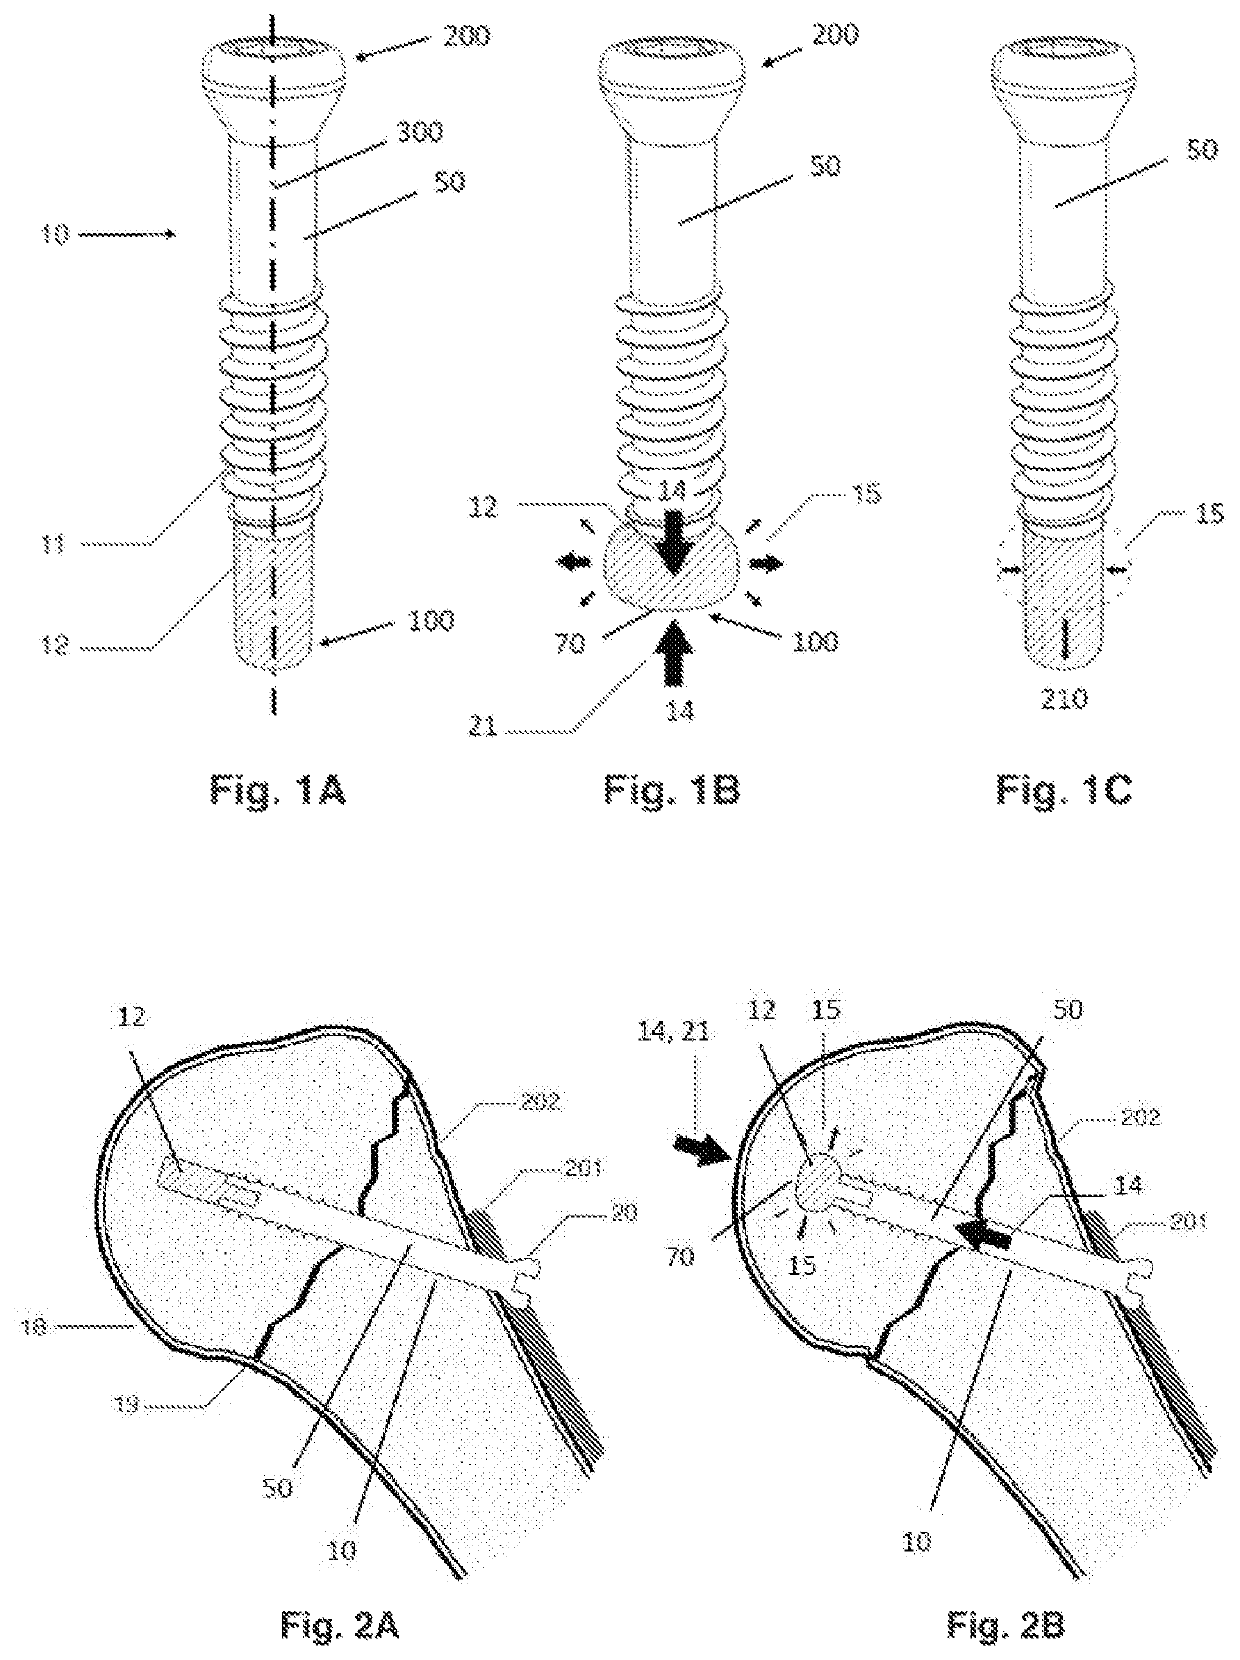 Anti-penetration bone implant device and method